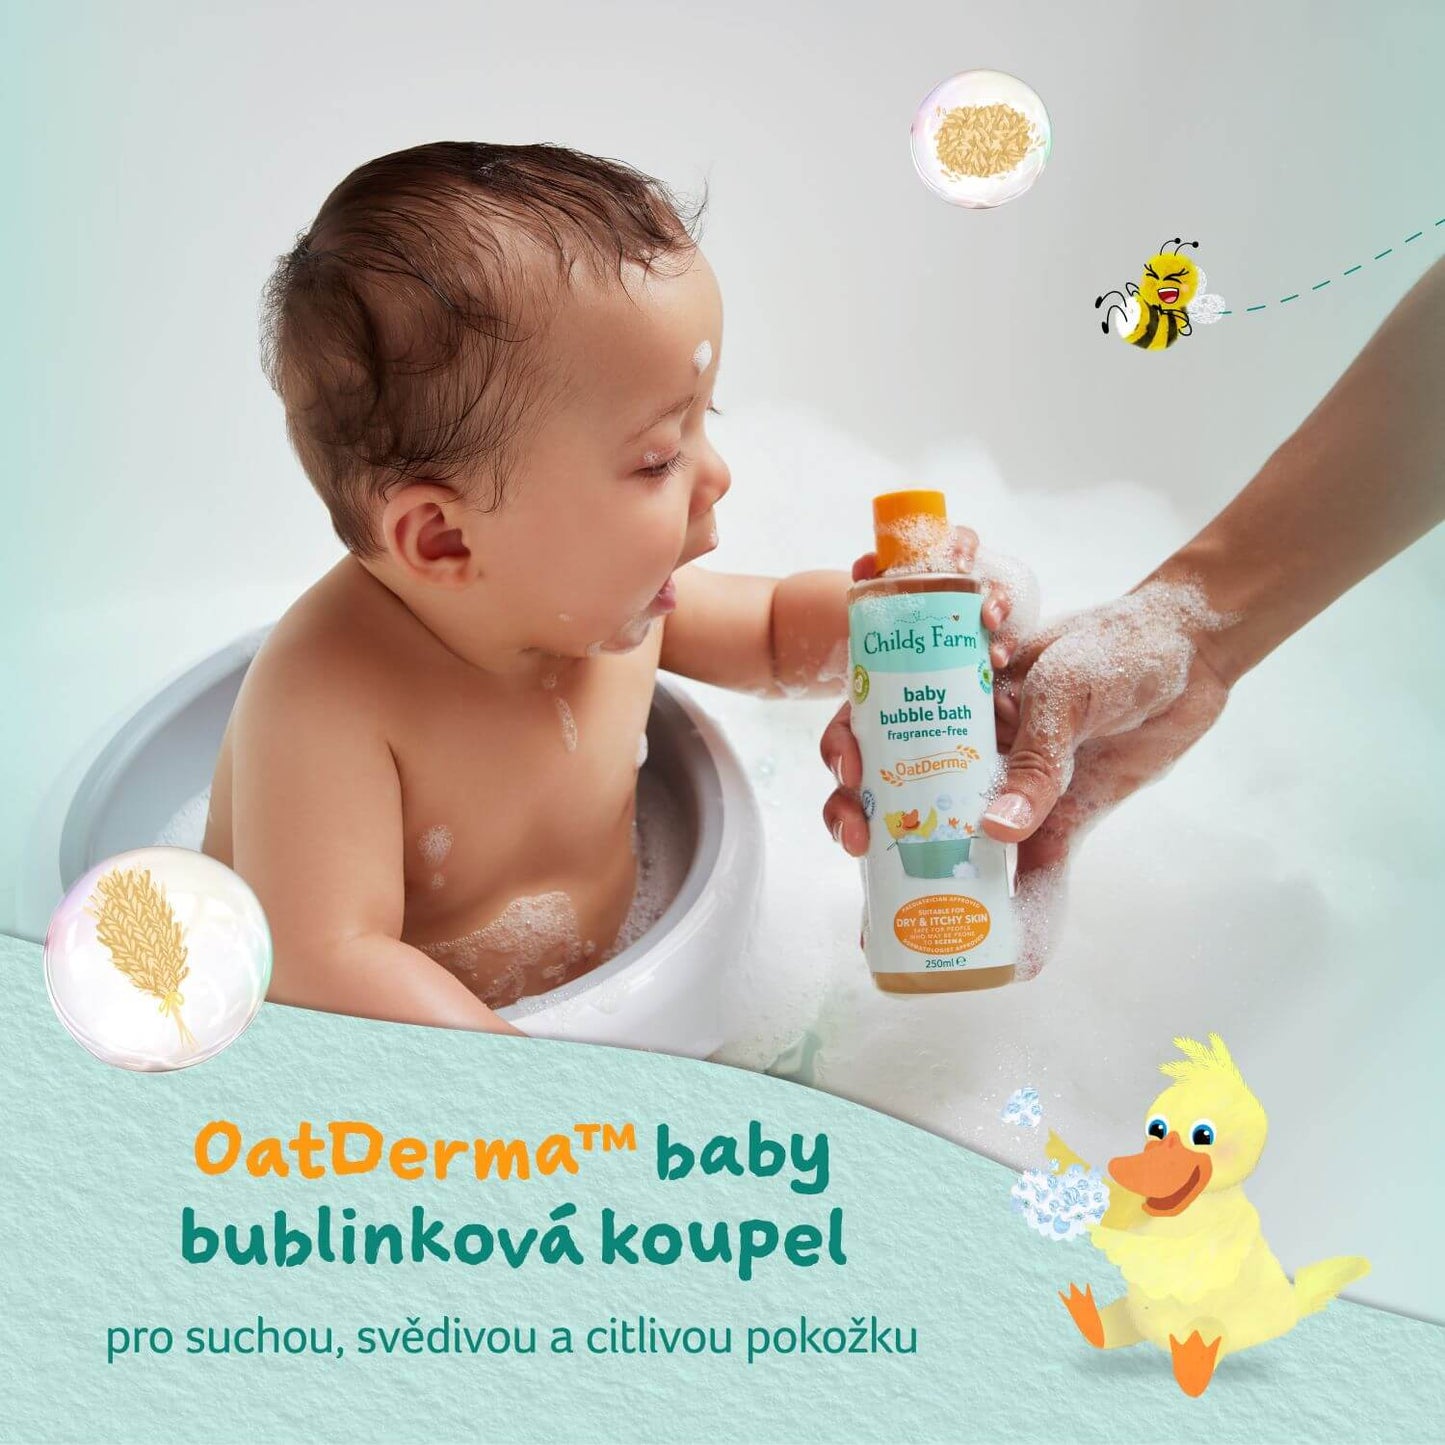 Childs Farm baby OatDerma™ bublinková koupel bez parfemace